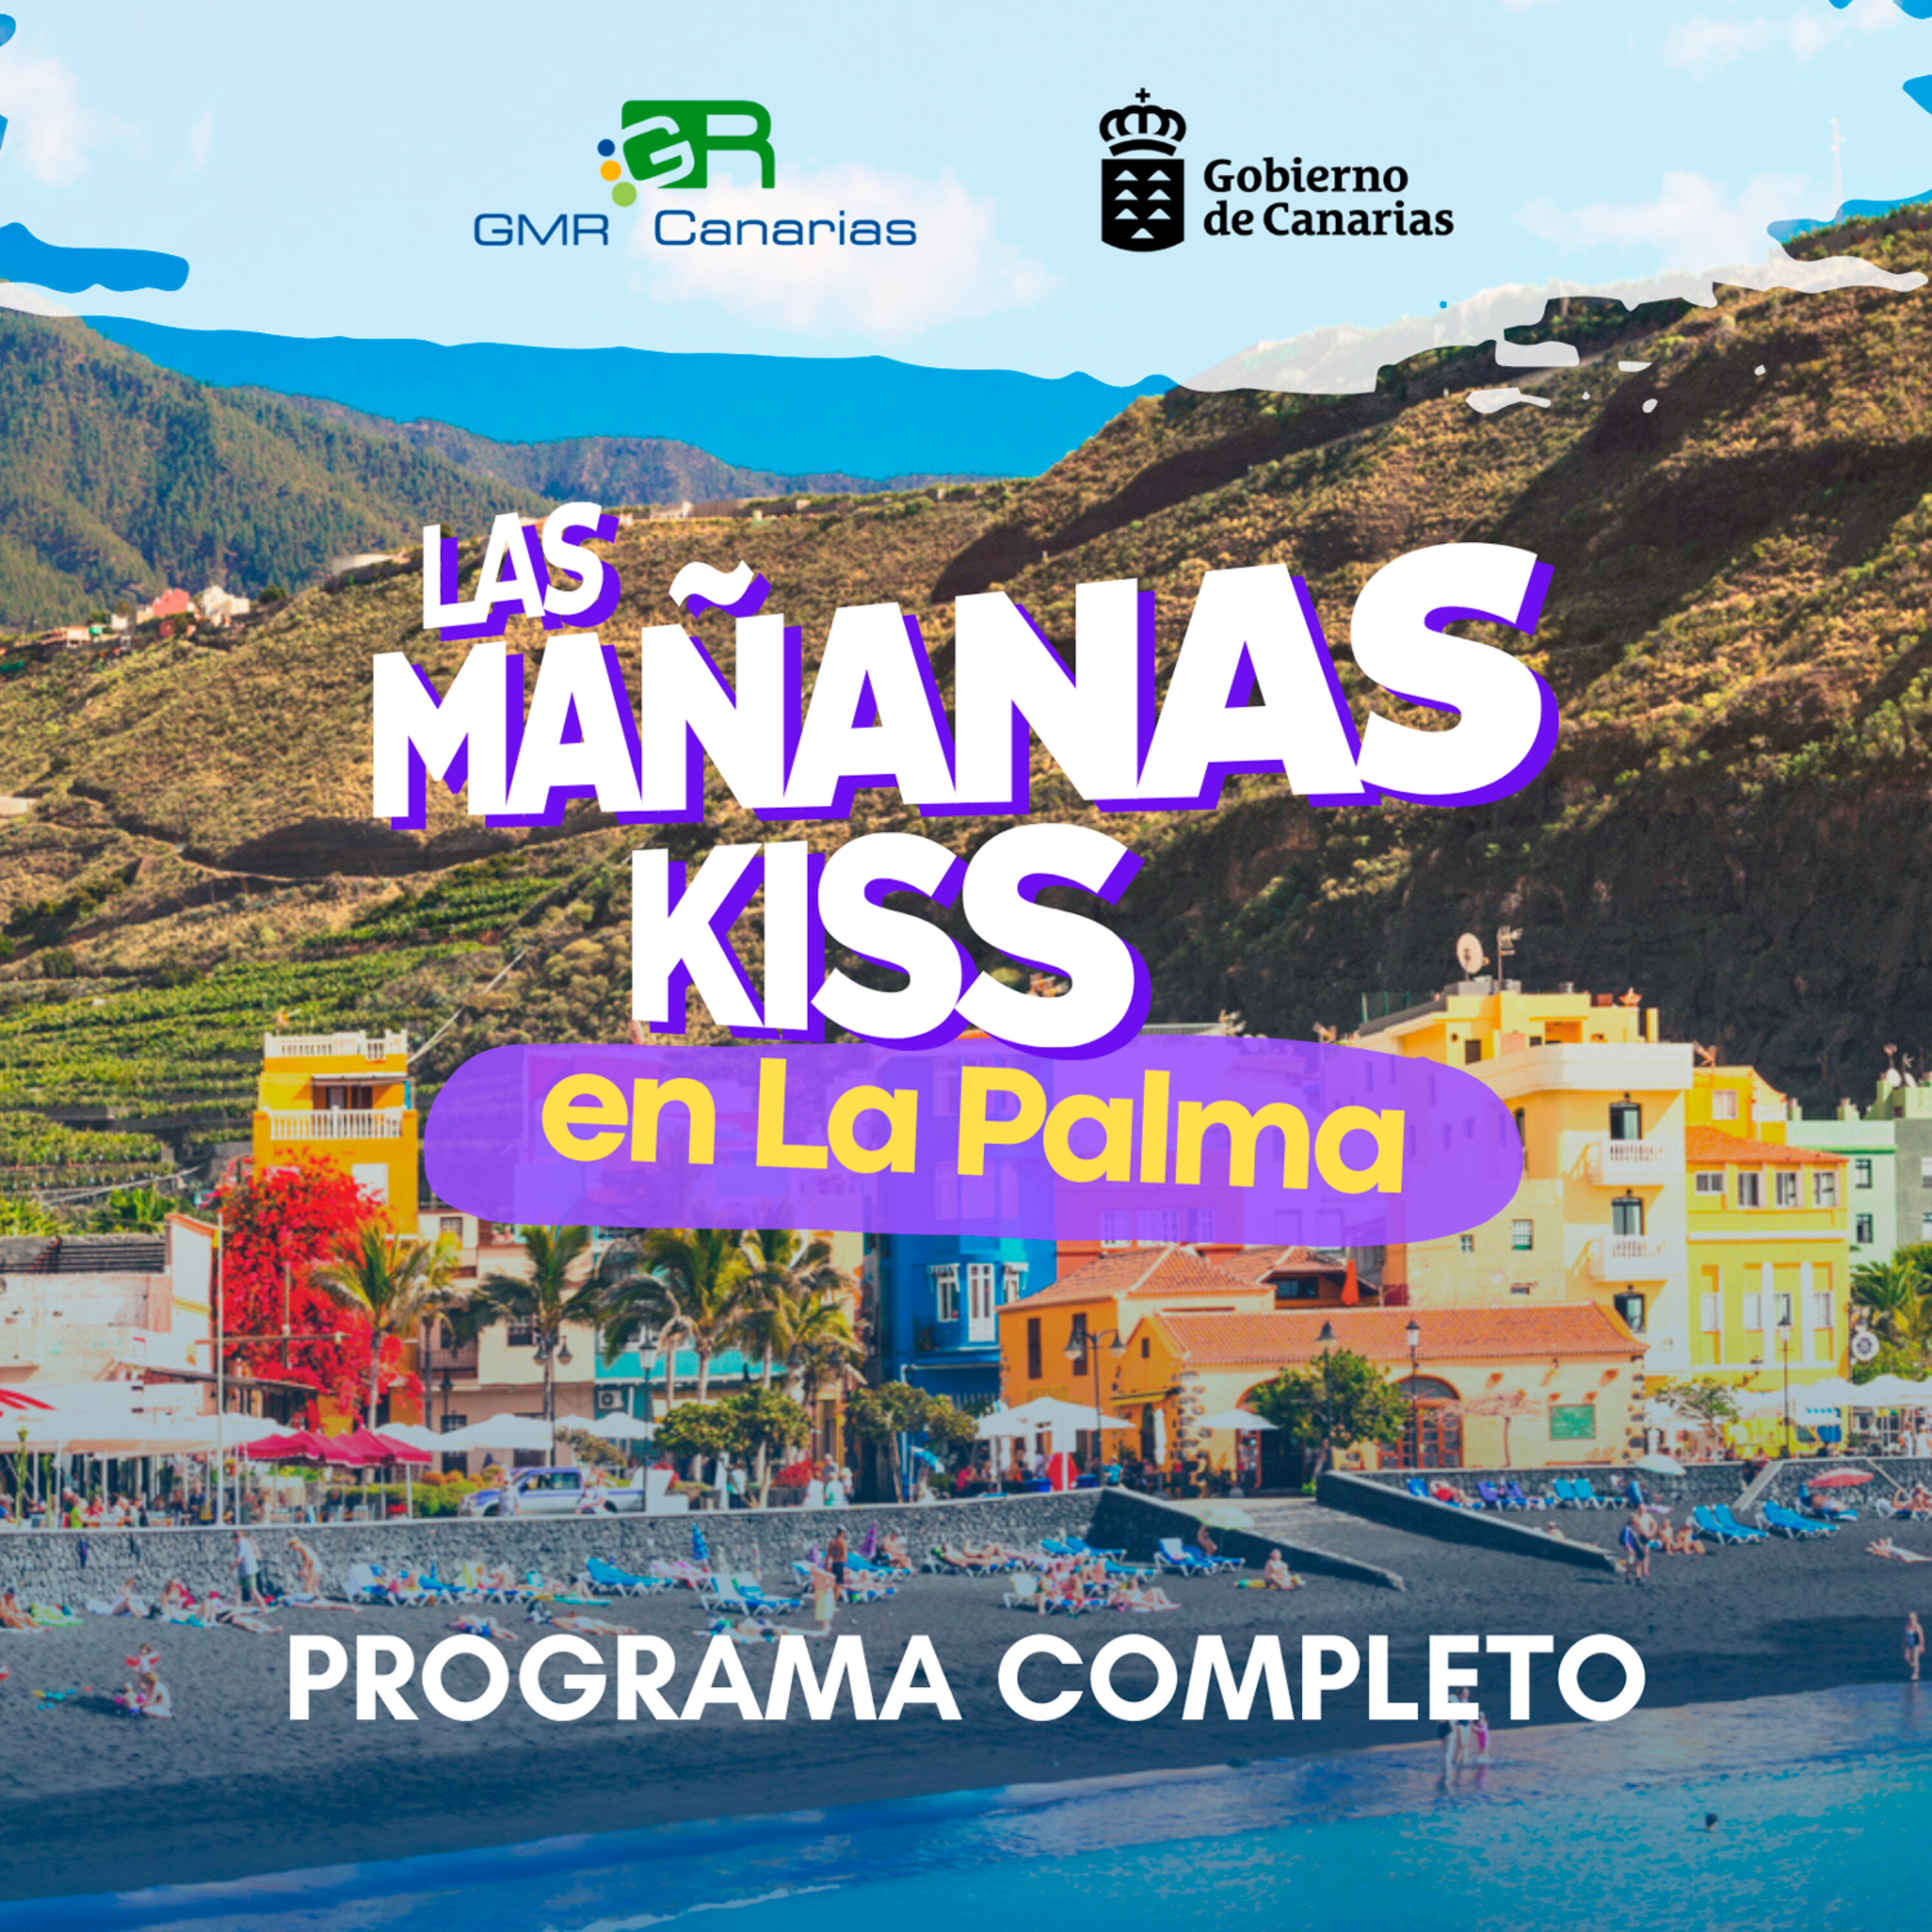 Las Mañanas Kiss desde La Palma (01/04/2022 – 08-09h)